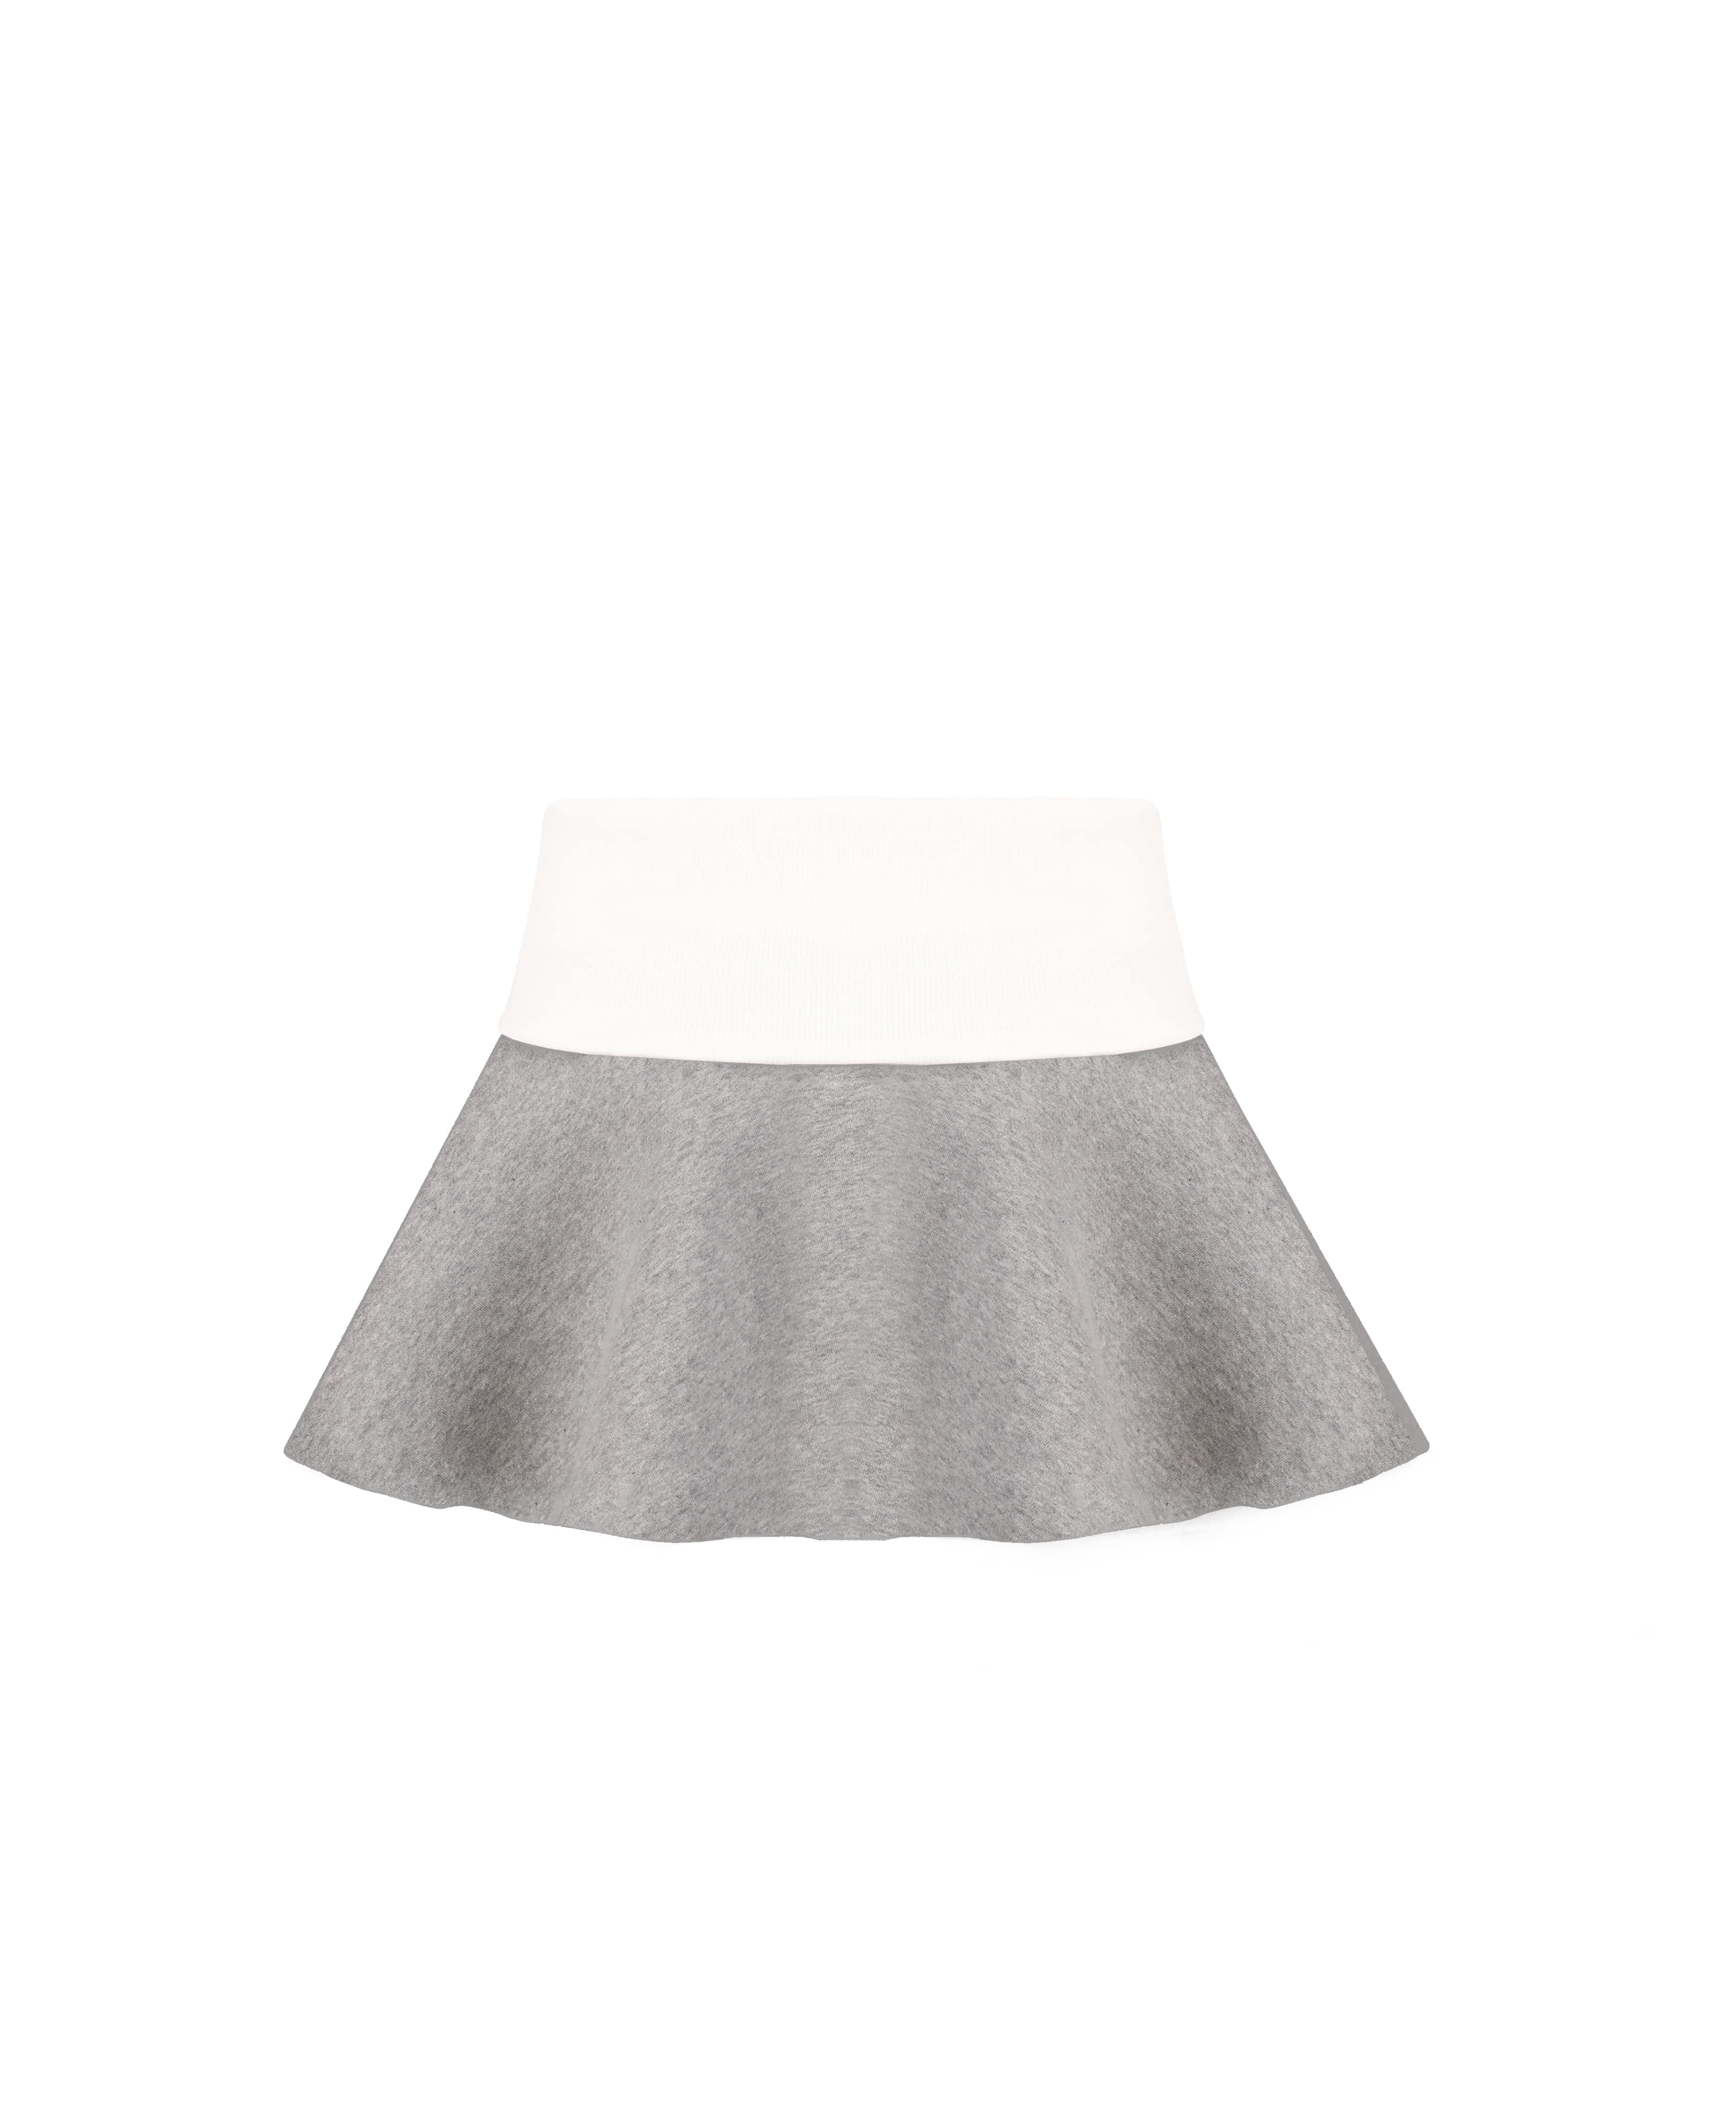 [Made] Marshmallow skirt / Gray